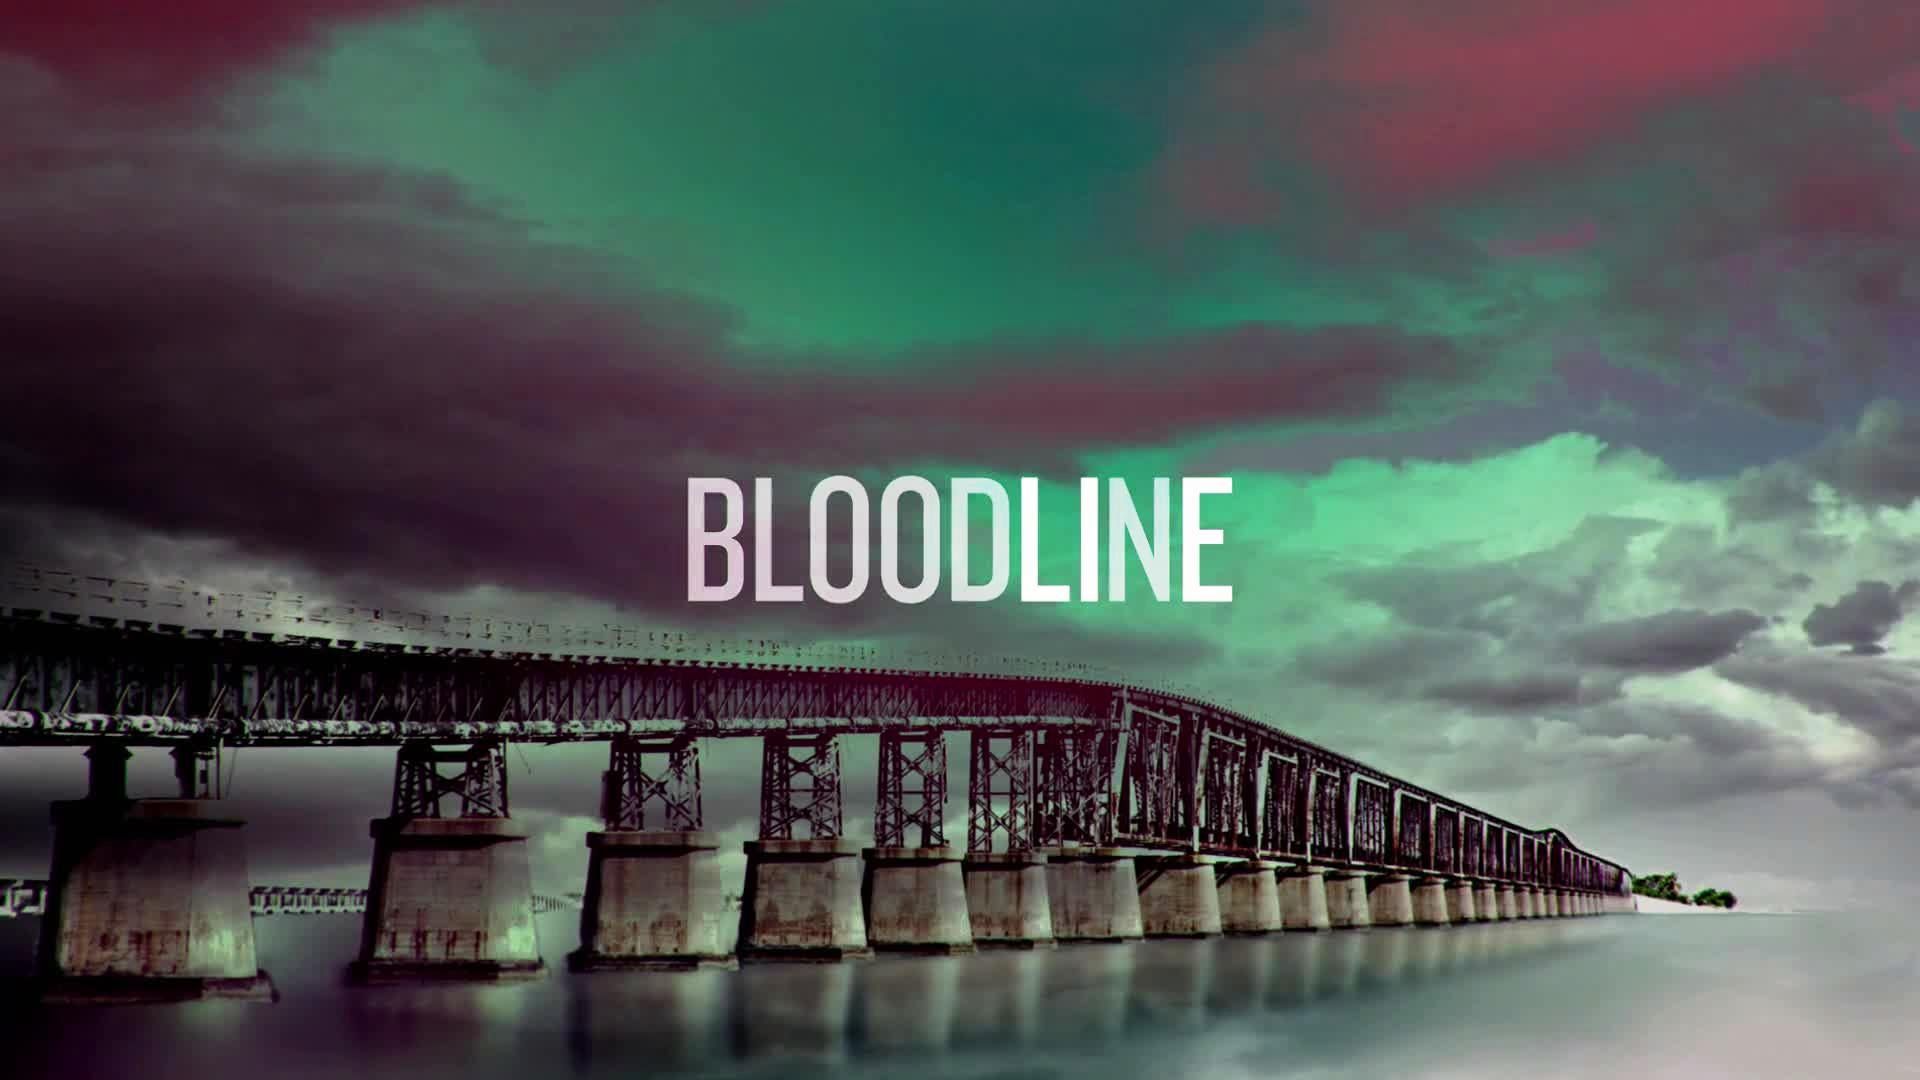 Bloodline Wallpaper Free Bloodline Background